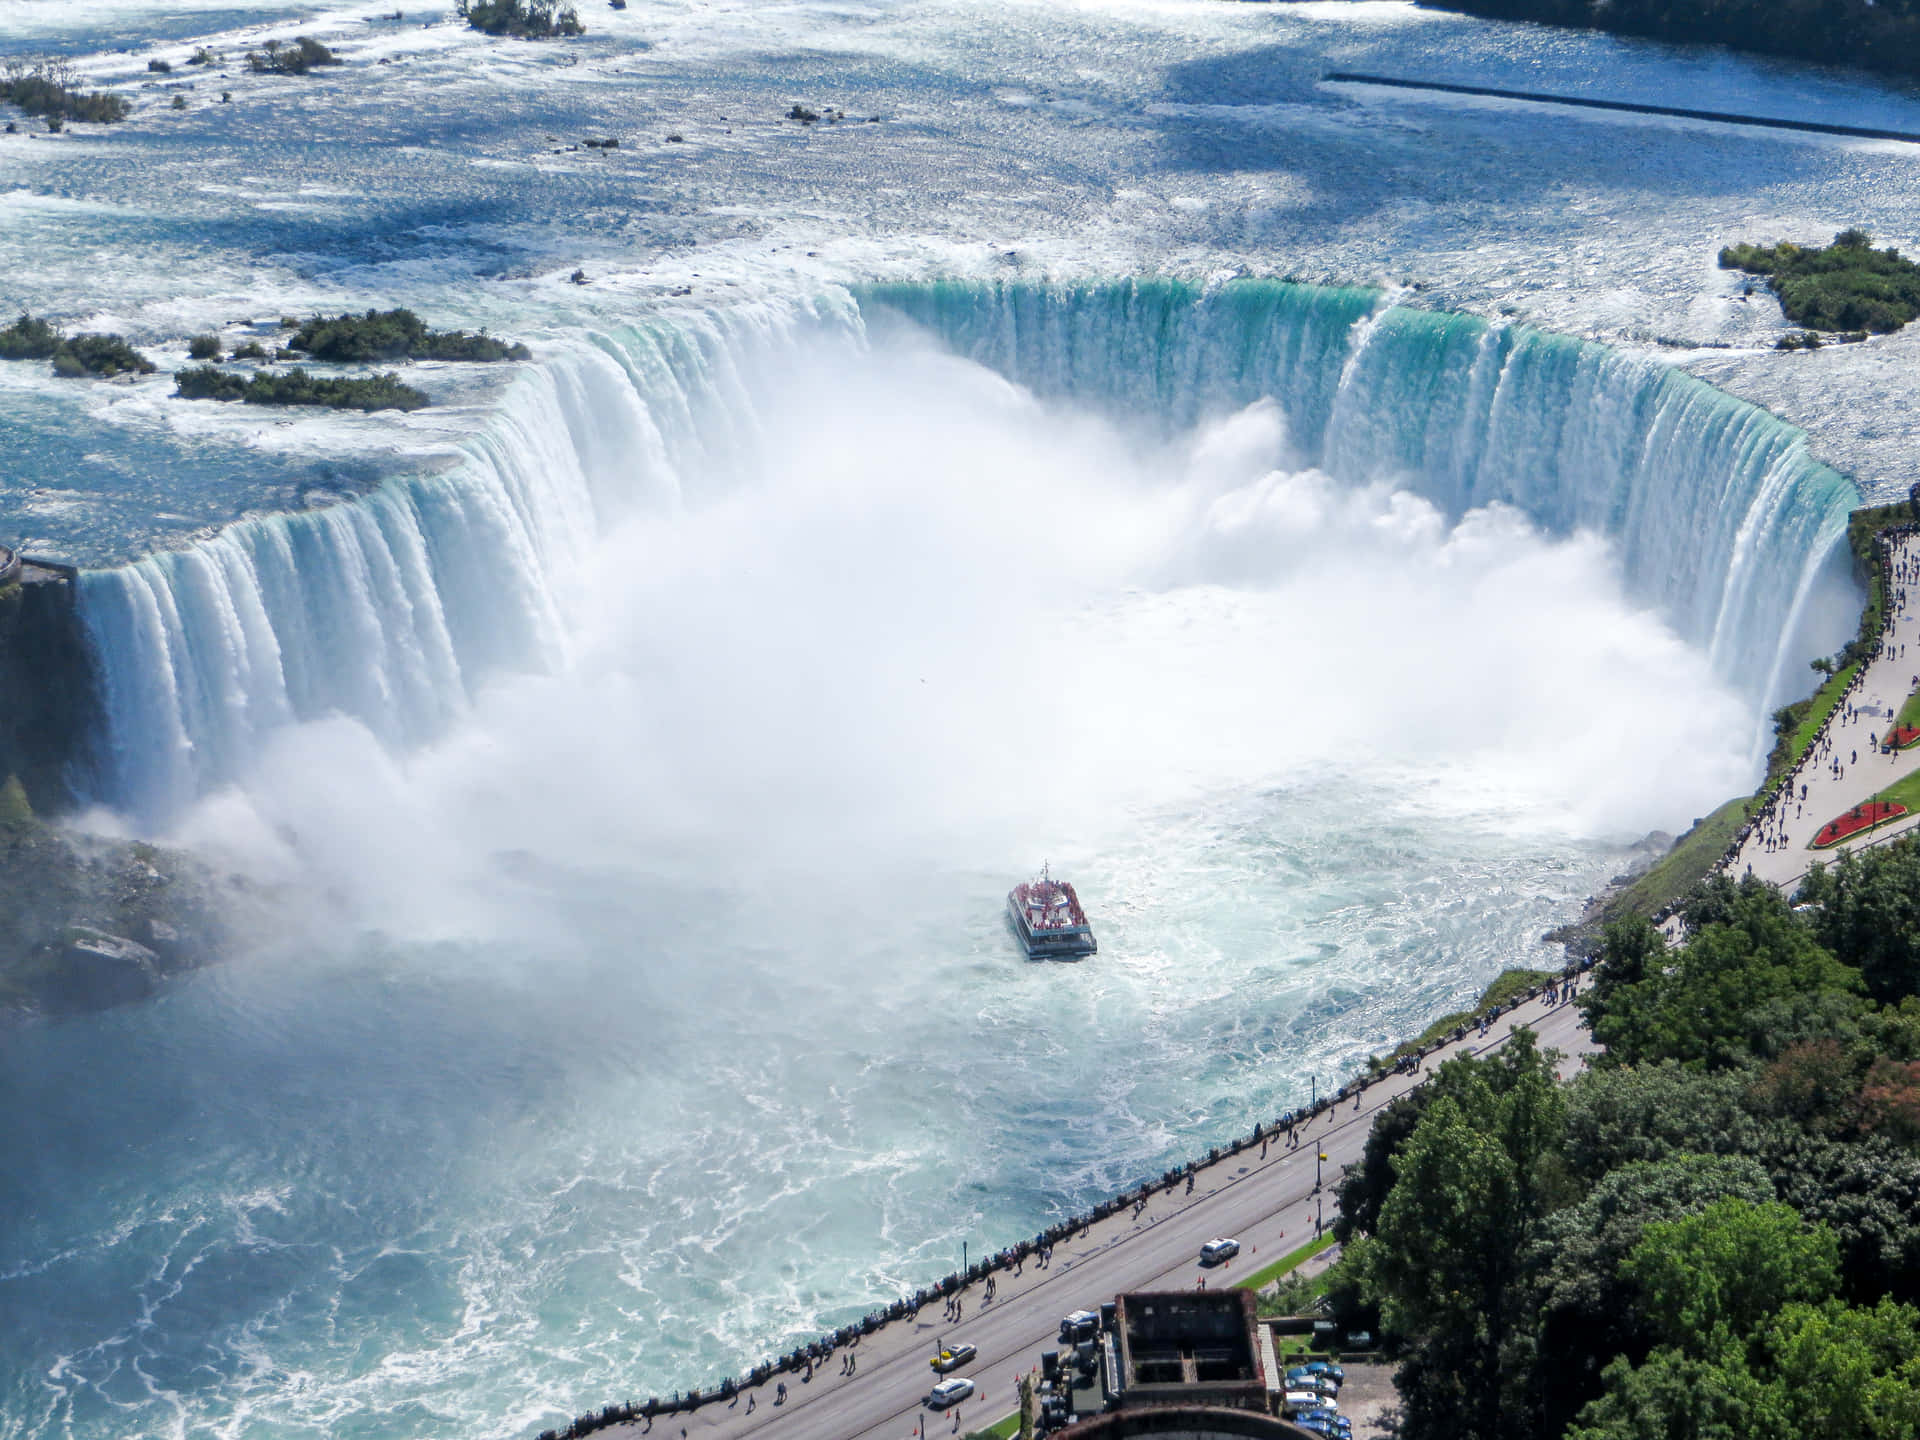 The magnificent beauty of Niagara Falls